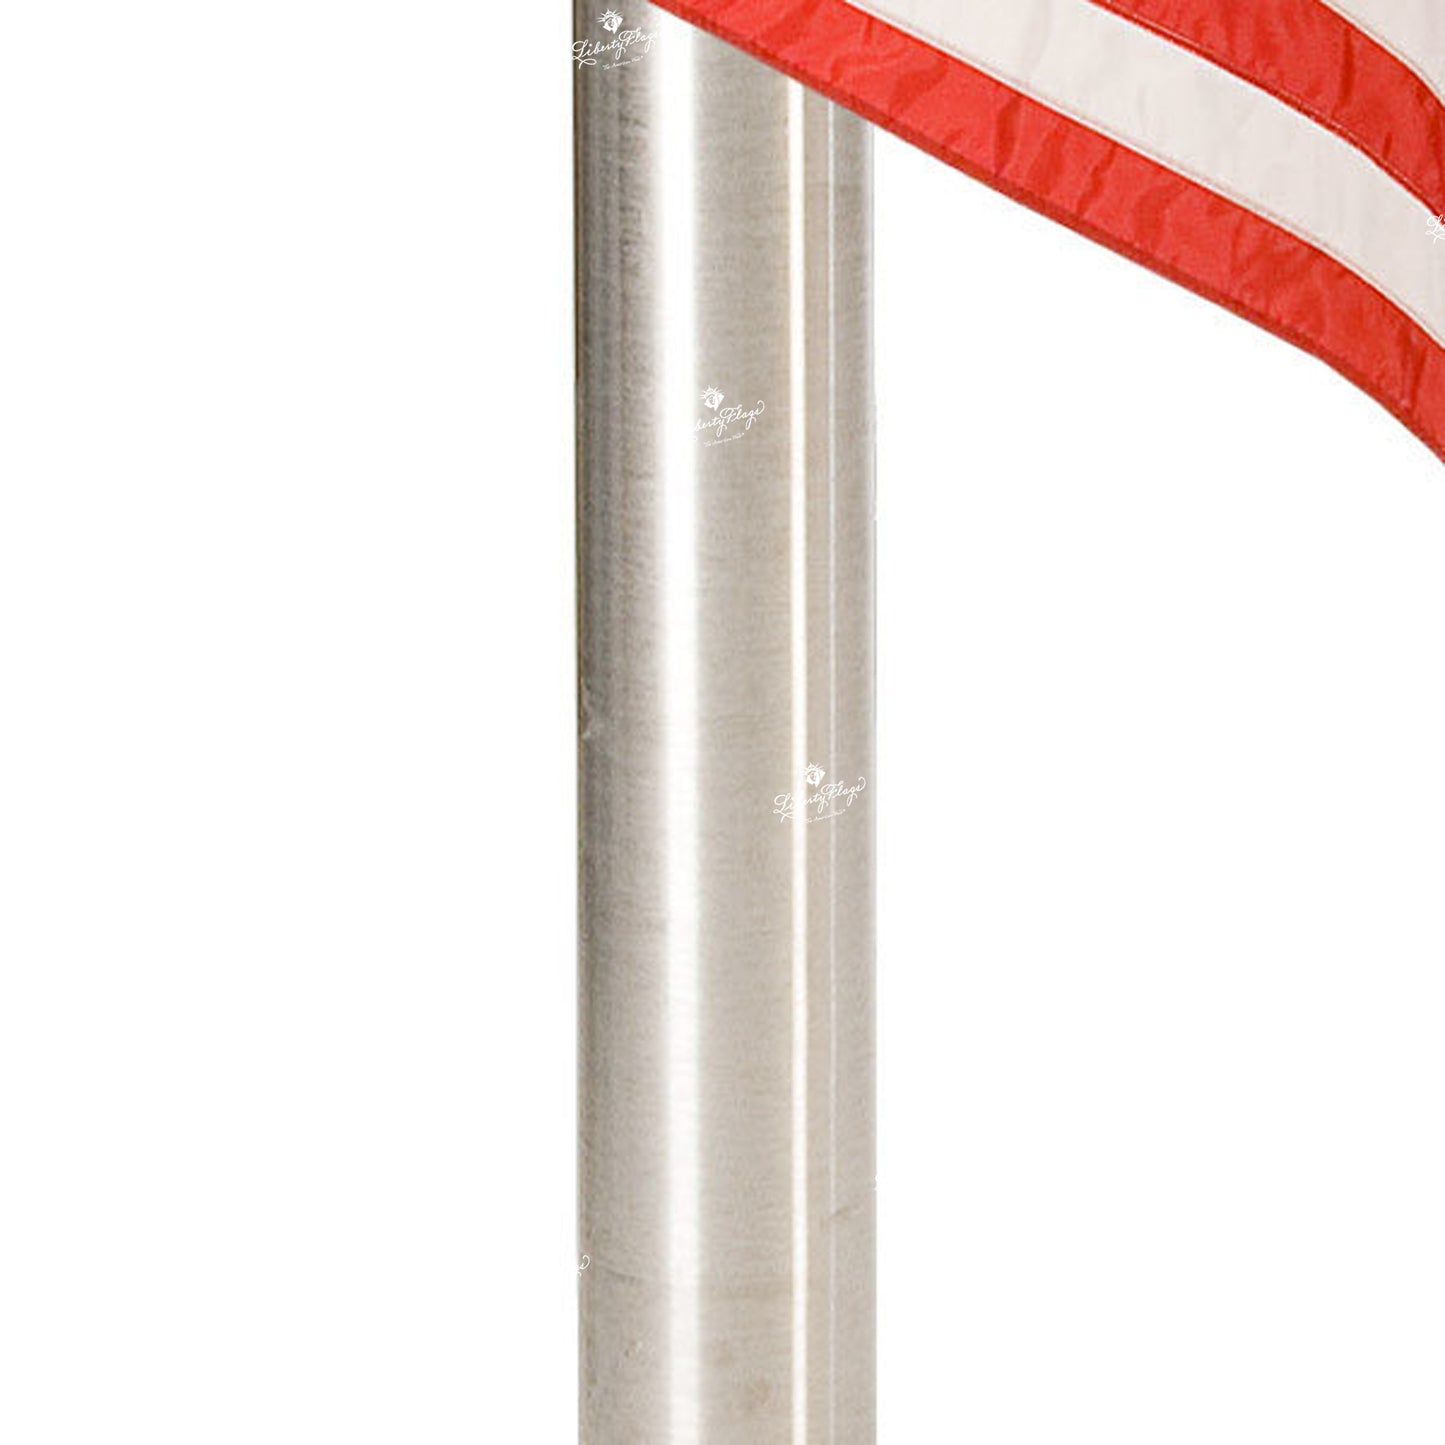 Ambassador Commercial Flagpole - External Halyard